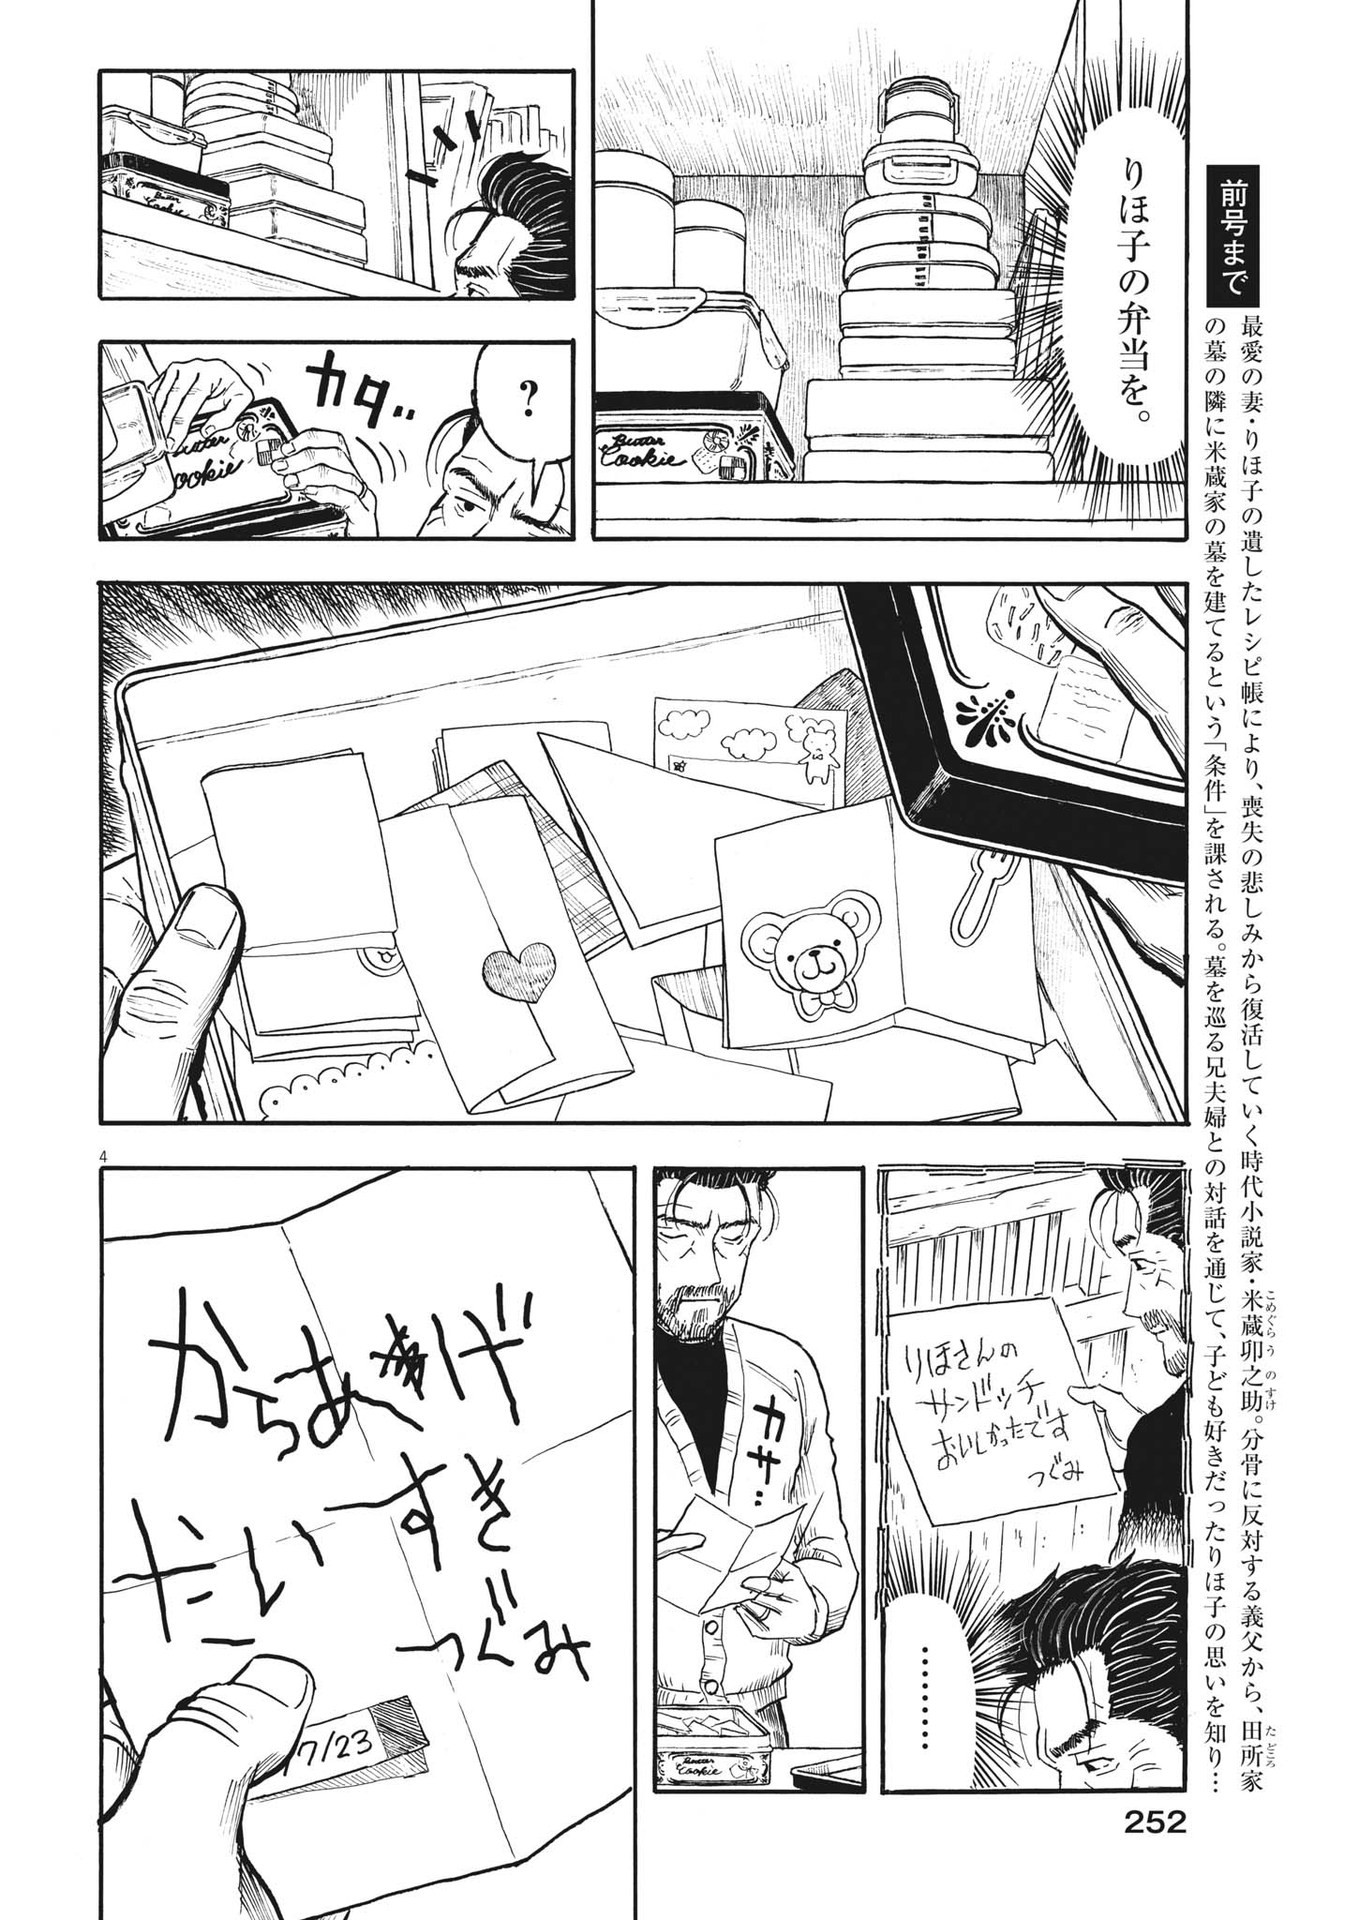 Komegura Fuufu no Recipe-chou - Chapter 33 - Page 4